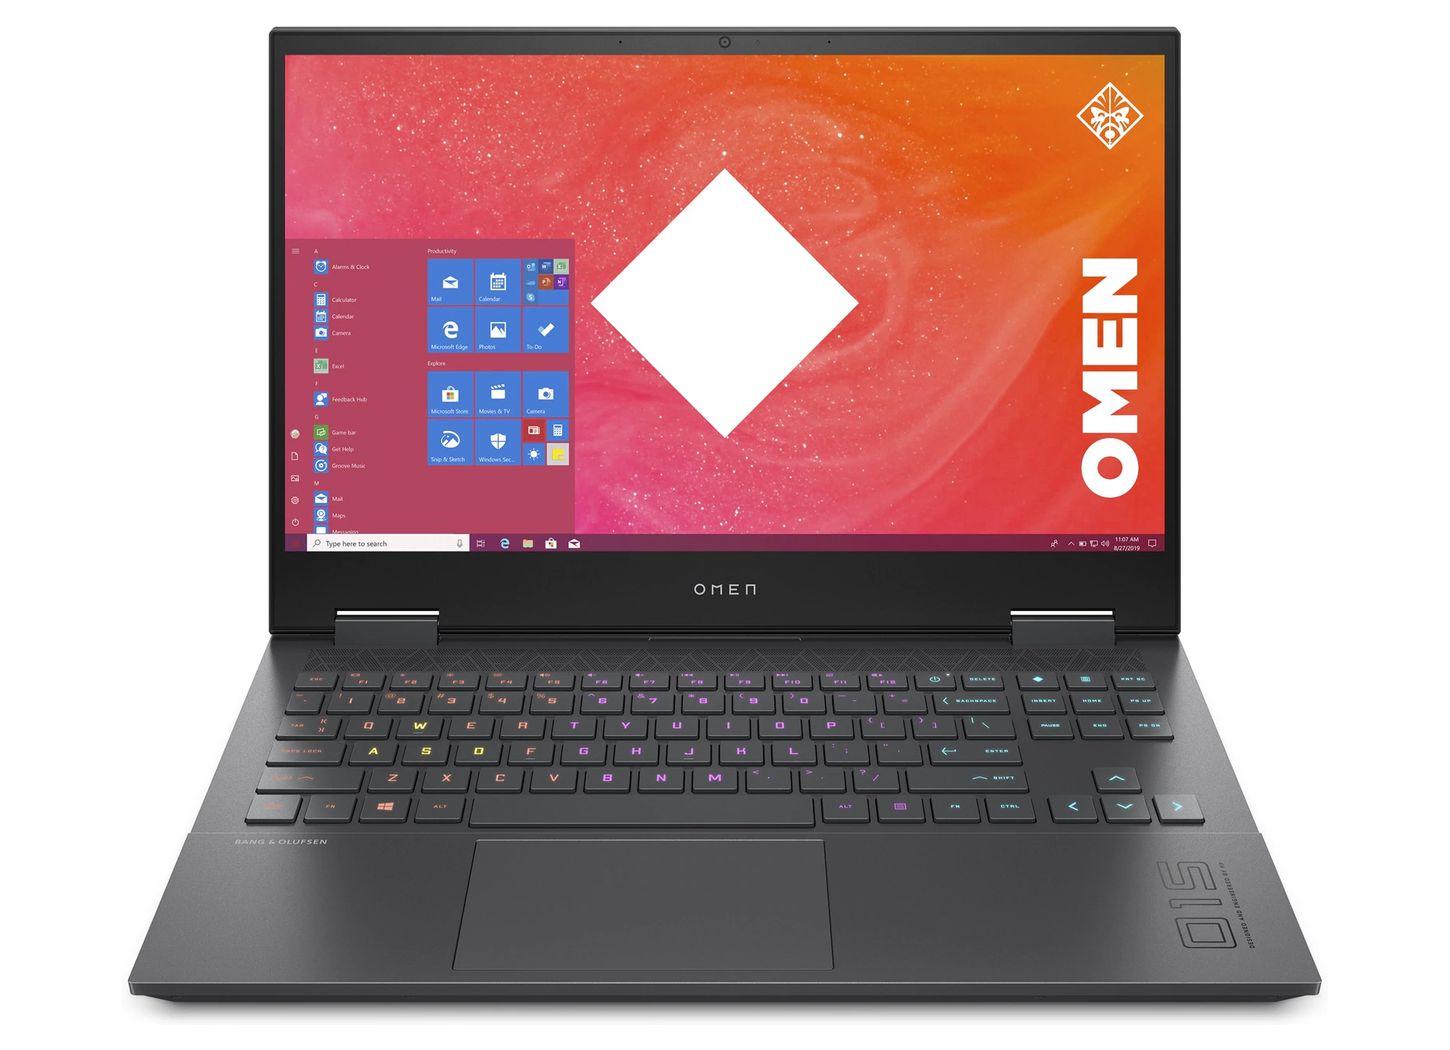 HP OMEN 15 (2020) laptop features Ryzen 7 4800H and GeForce RTX 